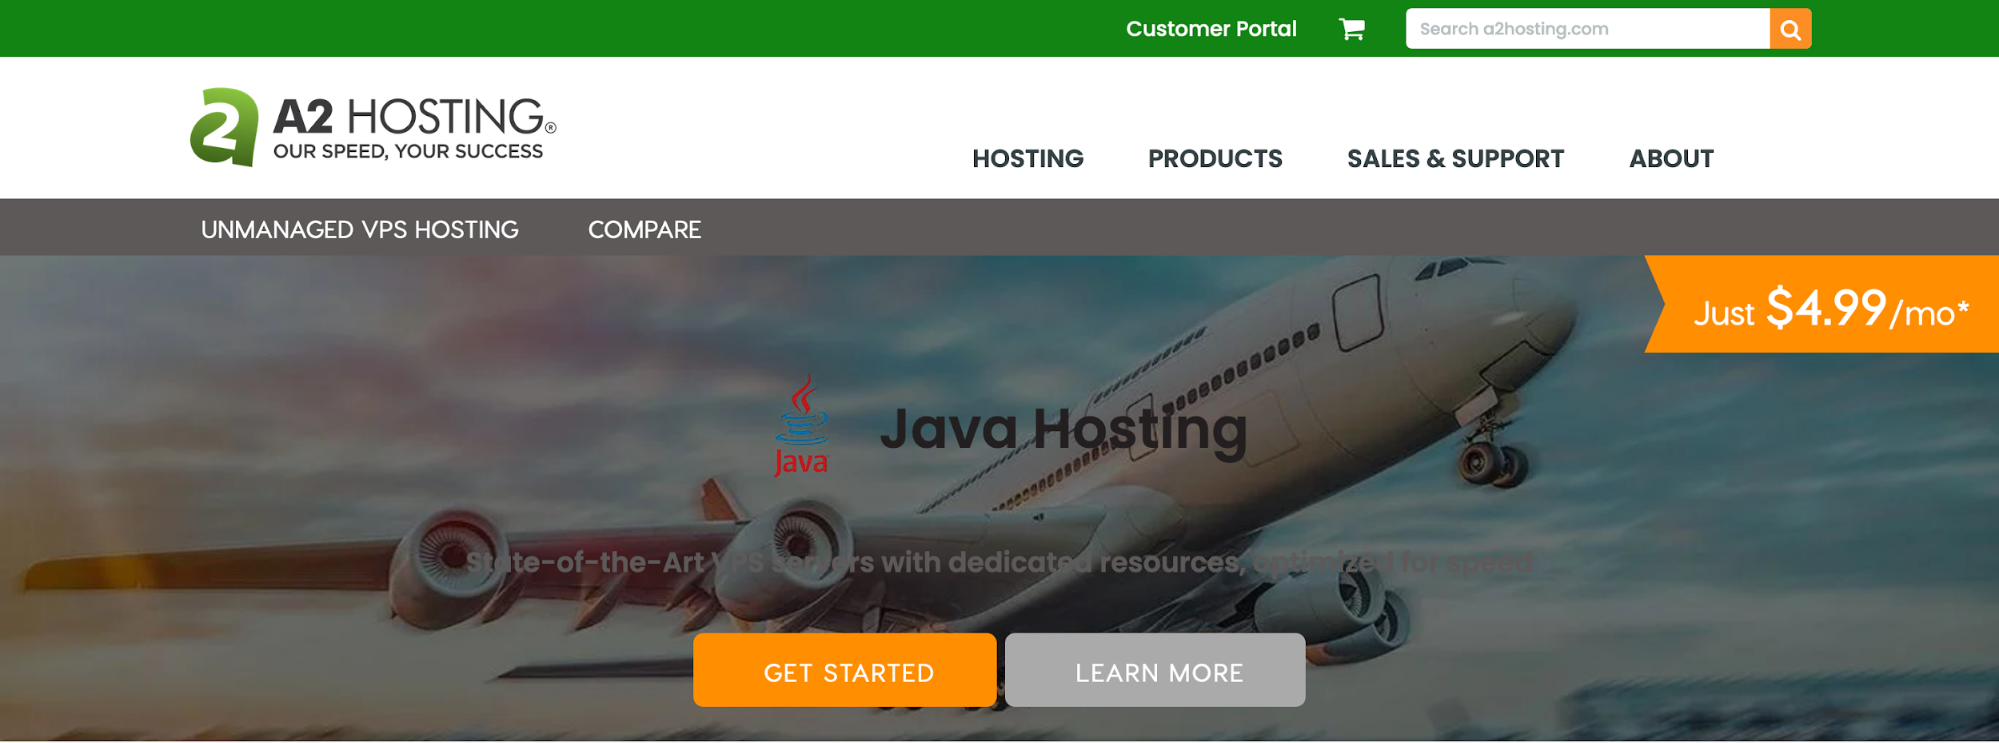 A2-Hosting-Java-Hosting